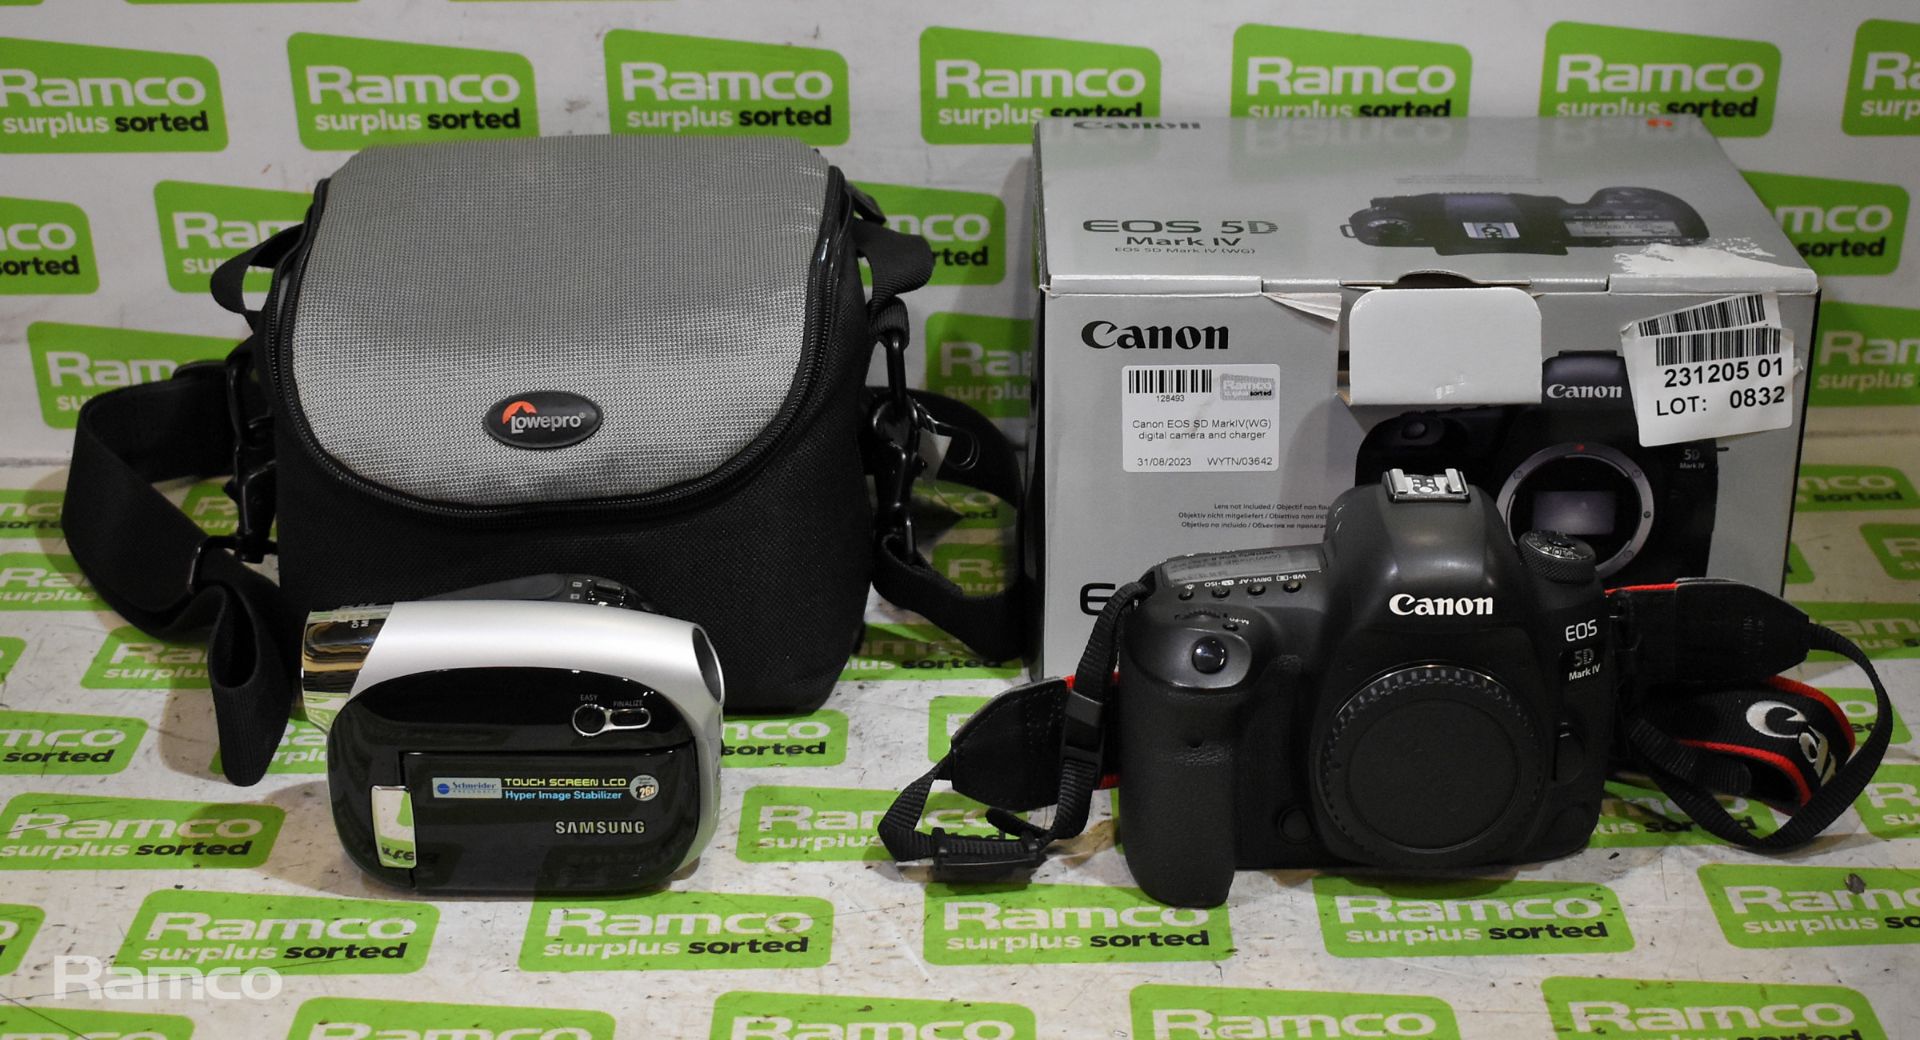 Canon EOS SD Mark IV(WG) digital camera and charger, Samsung VP-DX10 / XEU camcorder